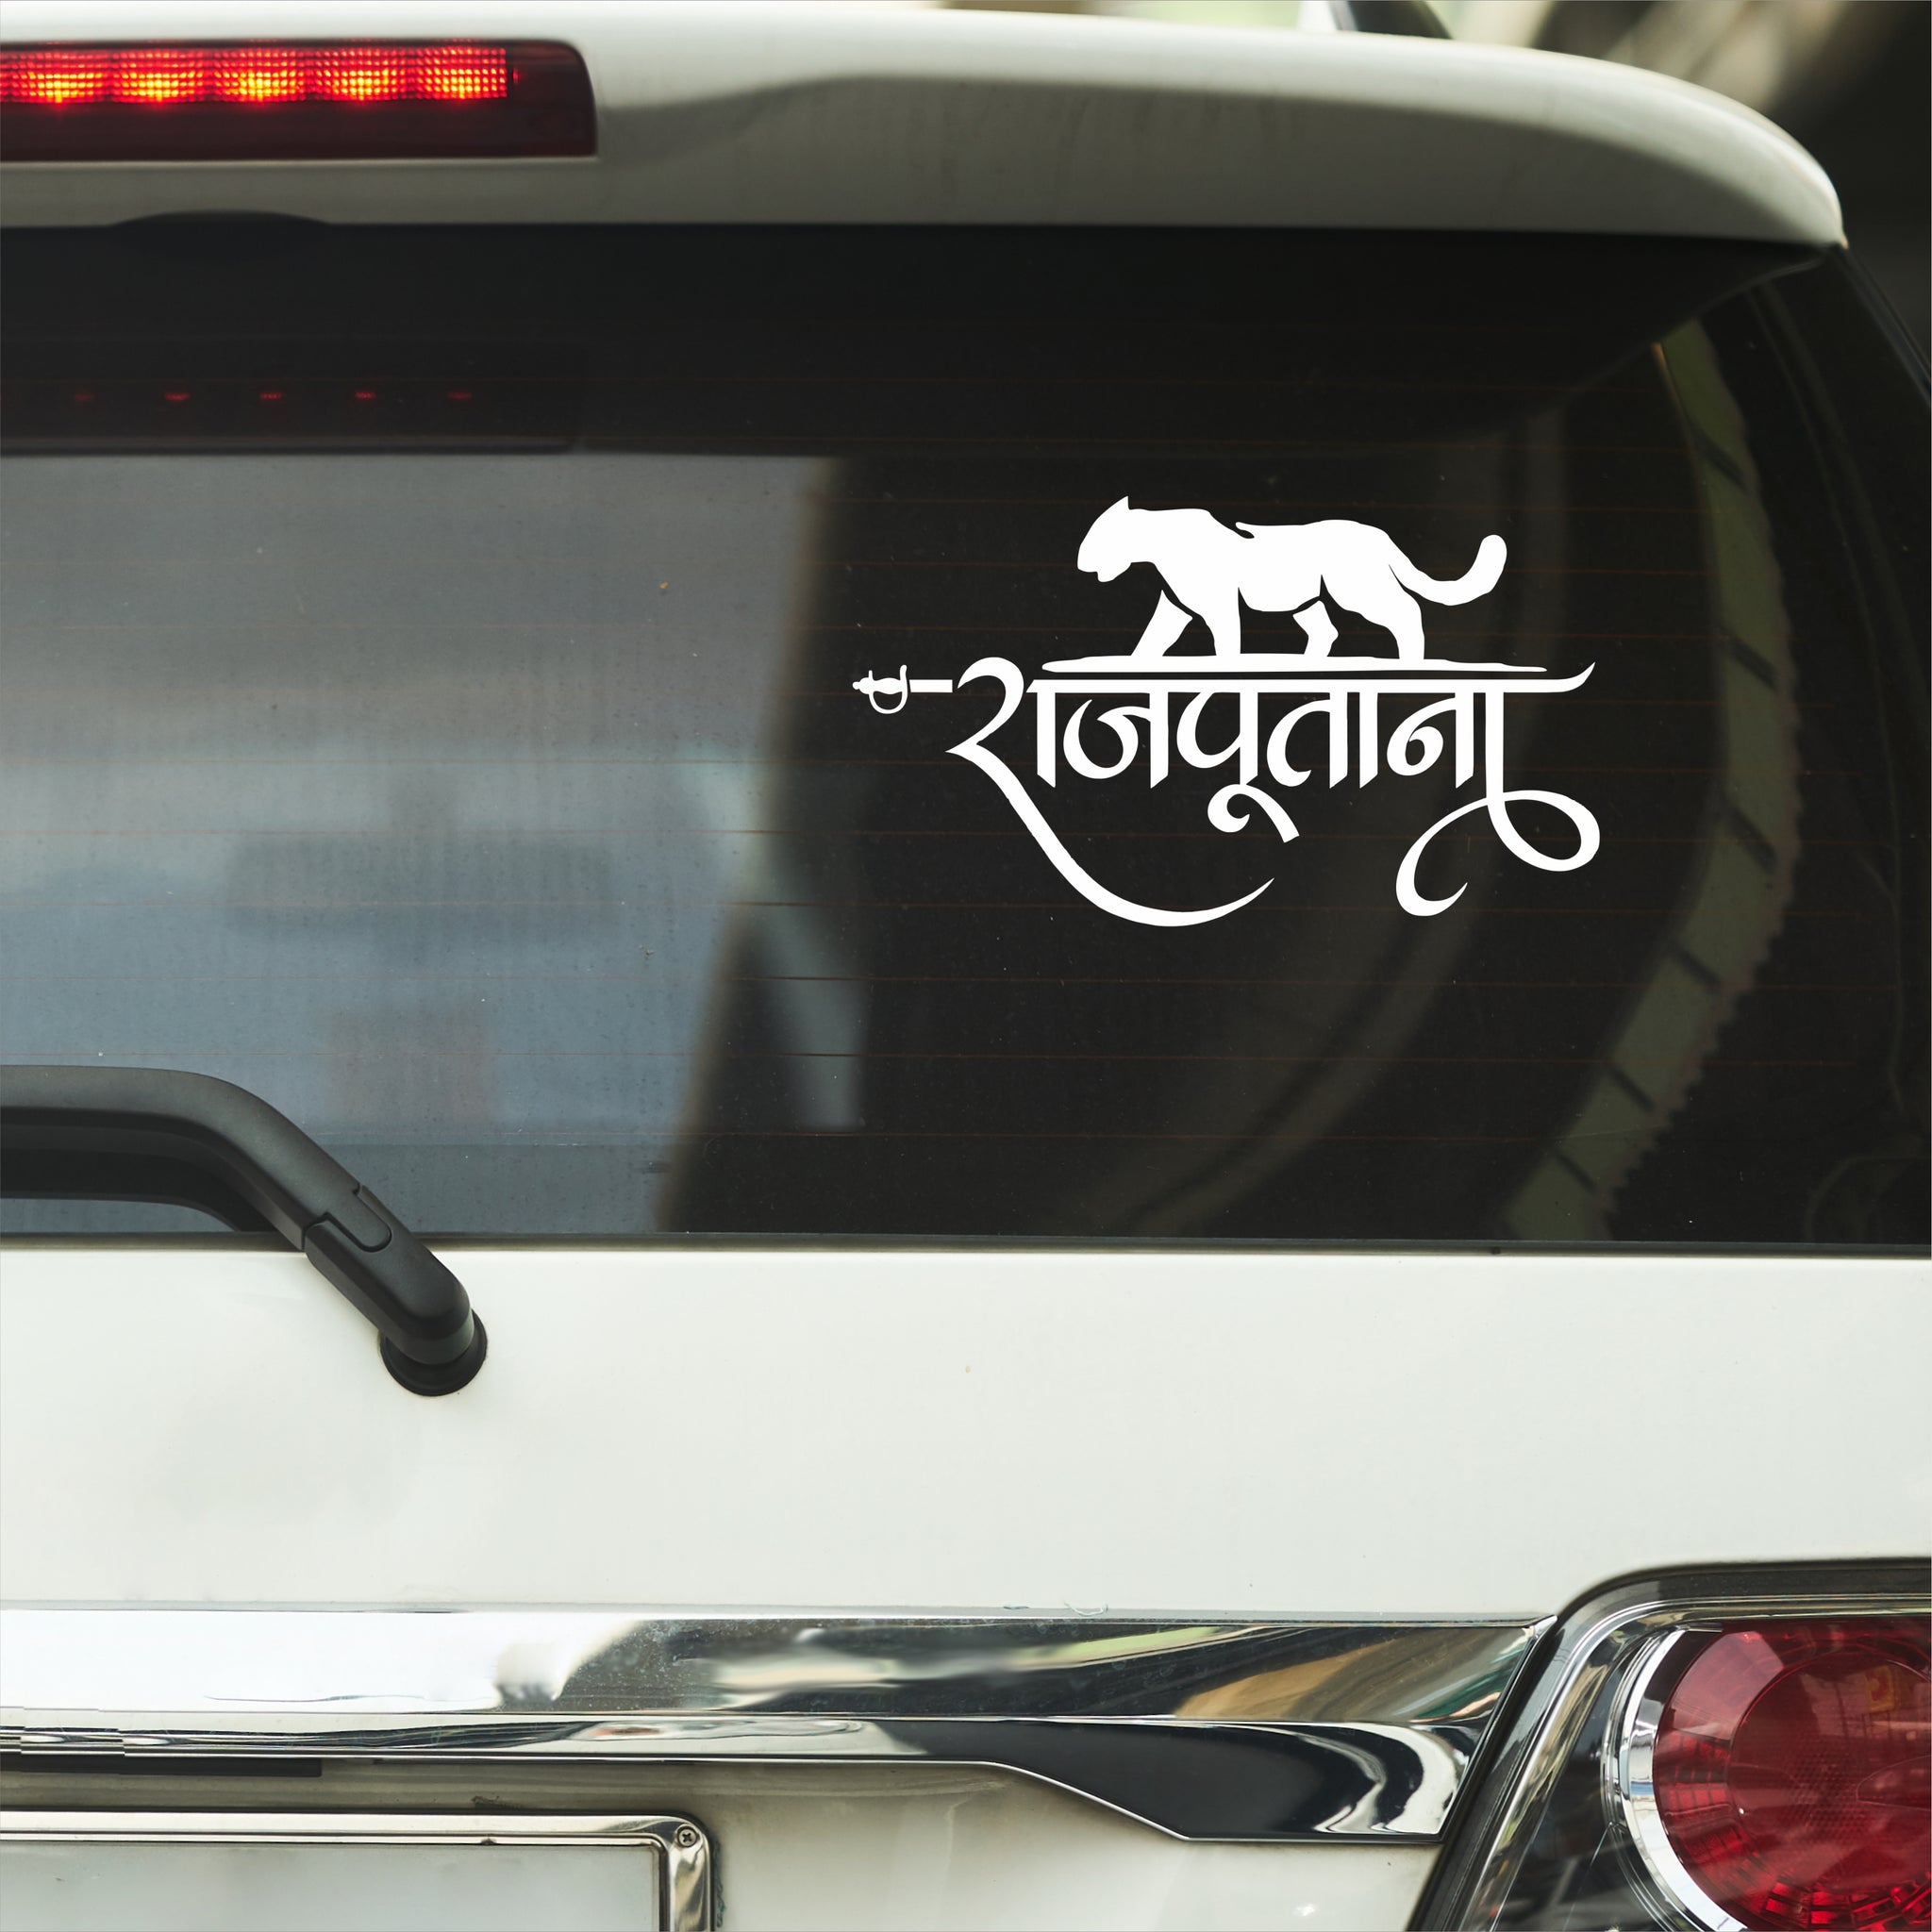 Rajput car sticker | Car stickers, Stickers, Car